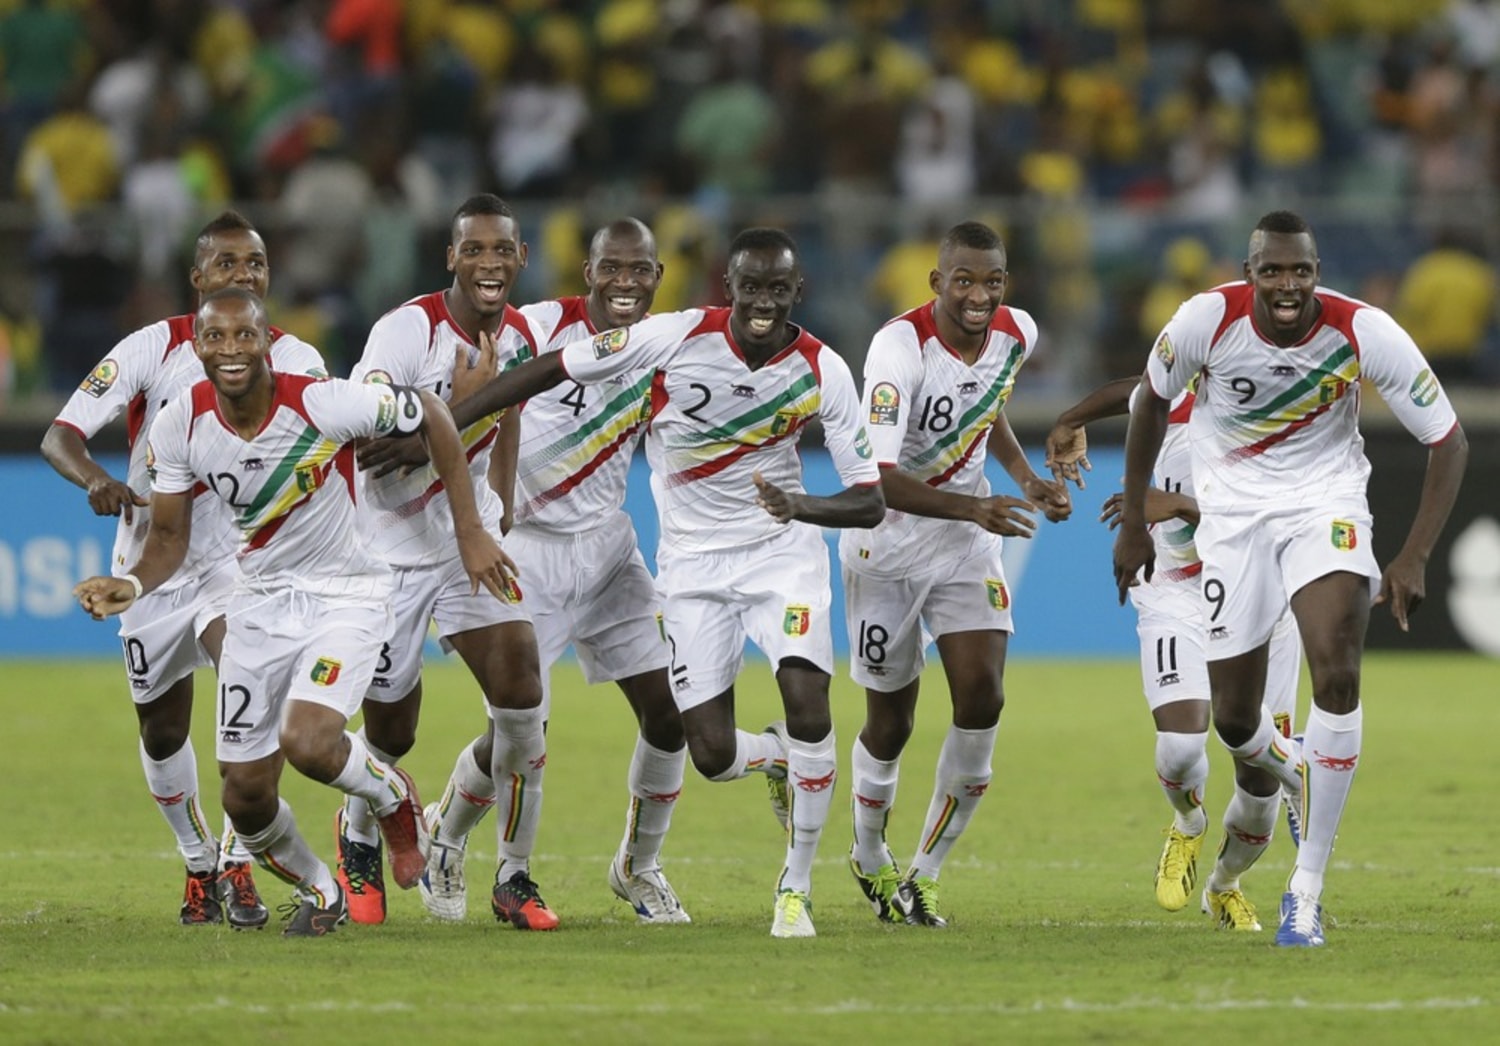 Banned no longer Soccer brings joy, hope to war-ravaged Mali